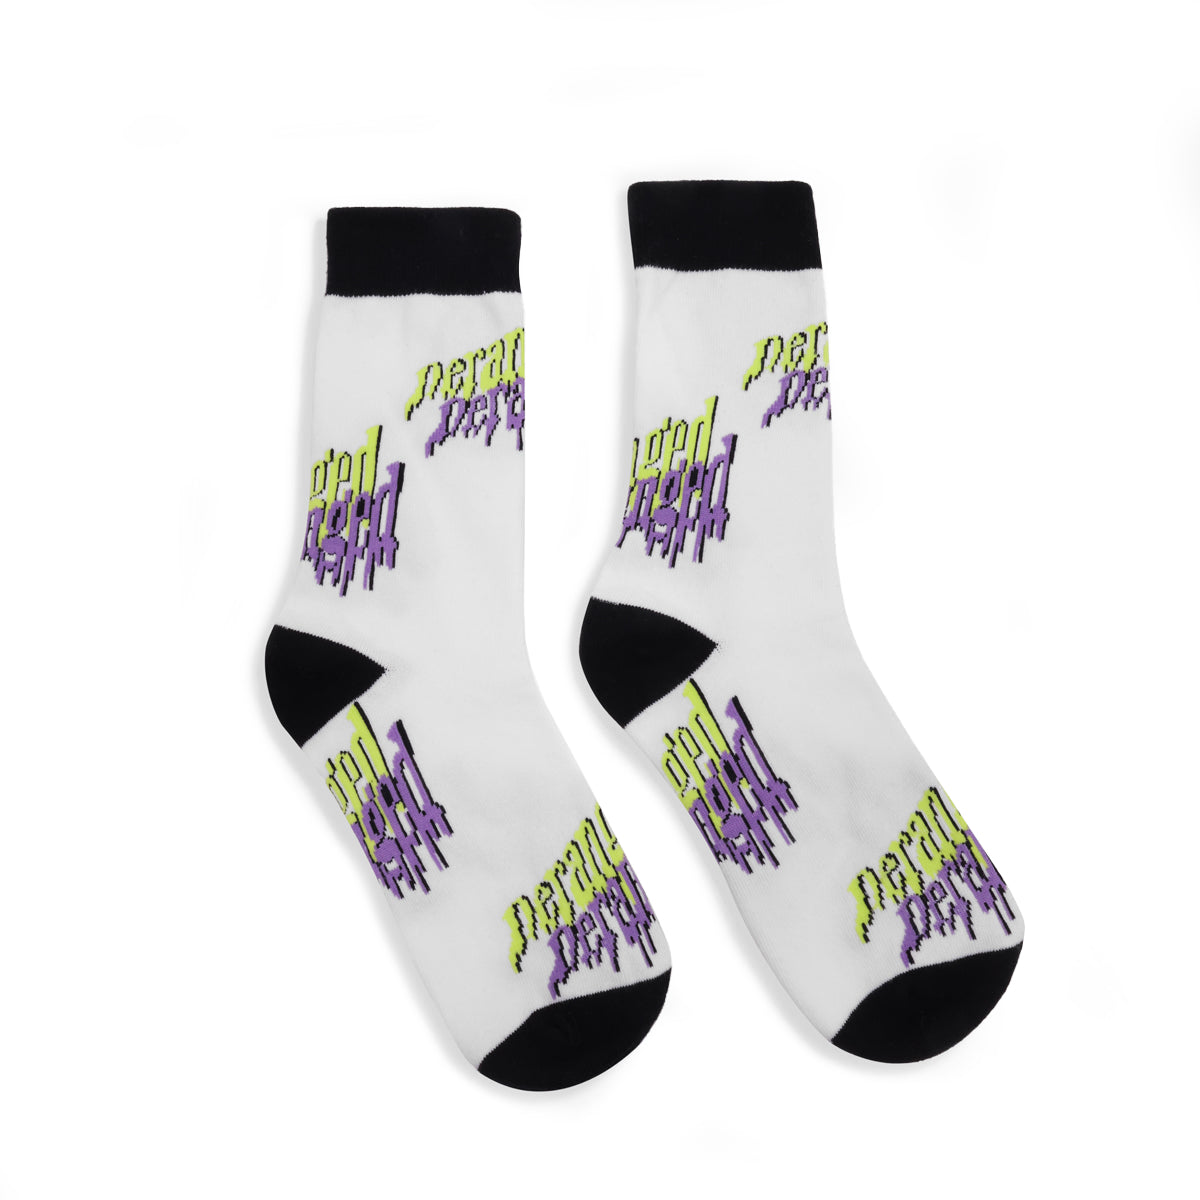 Deranged Scooby Socks - Accessories - KOI Footwear - White - Front View